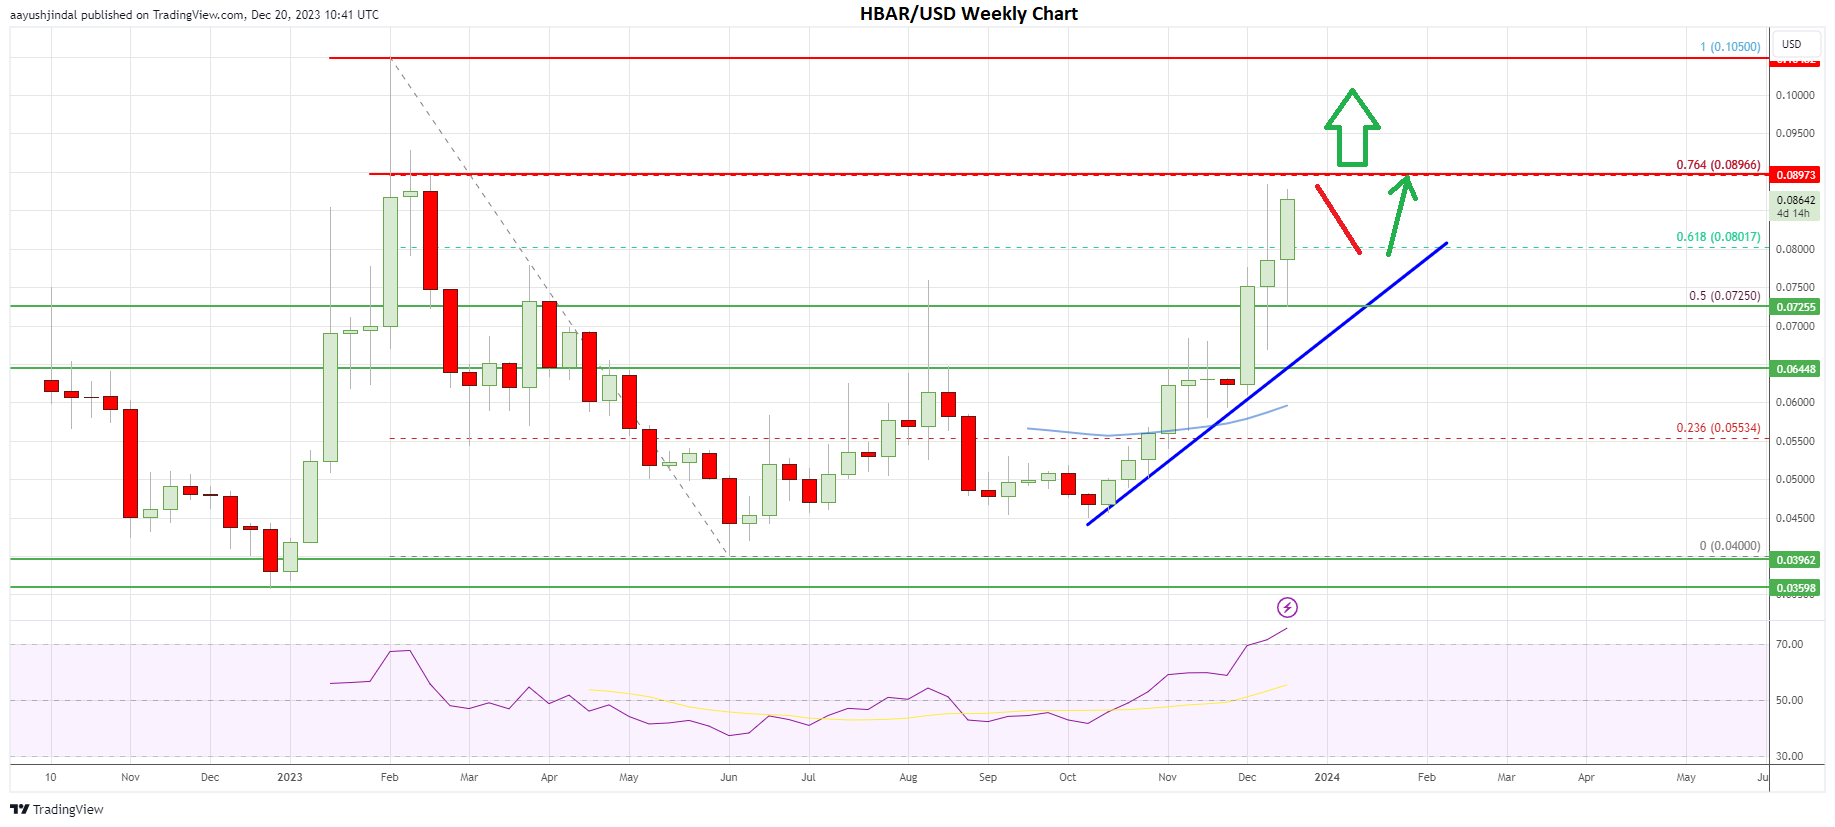 Hedera’s token price weekly chart | Source: HBAR/USD on TradingView.com